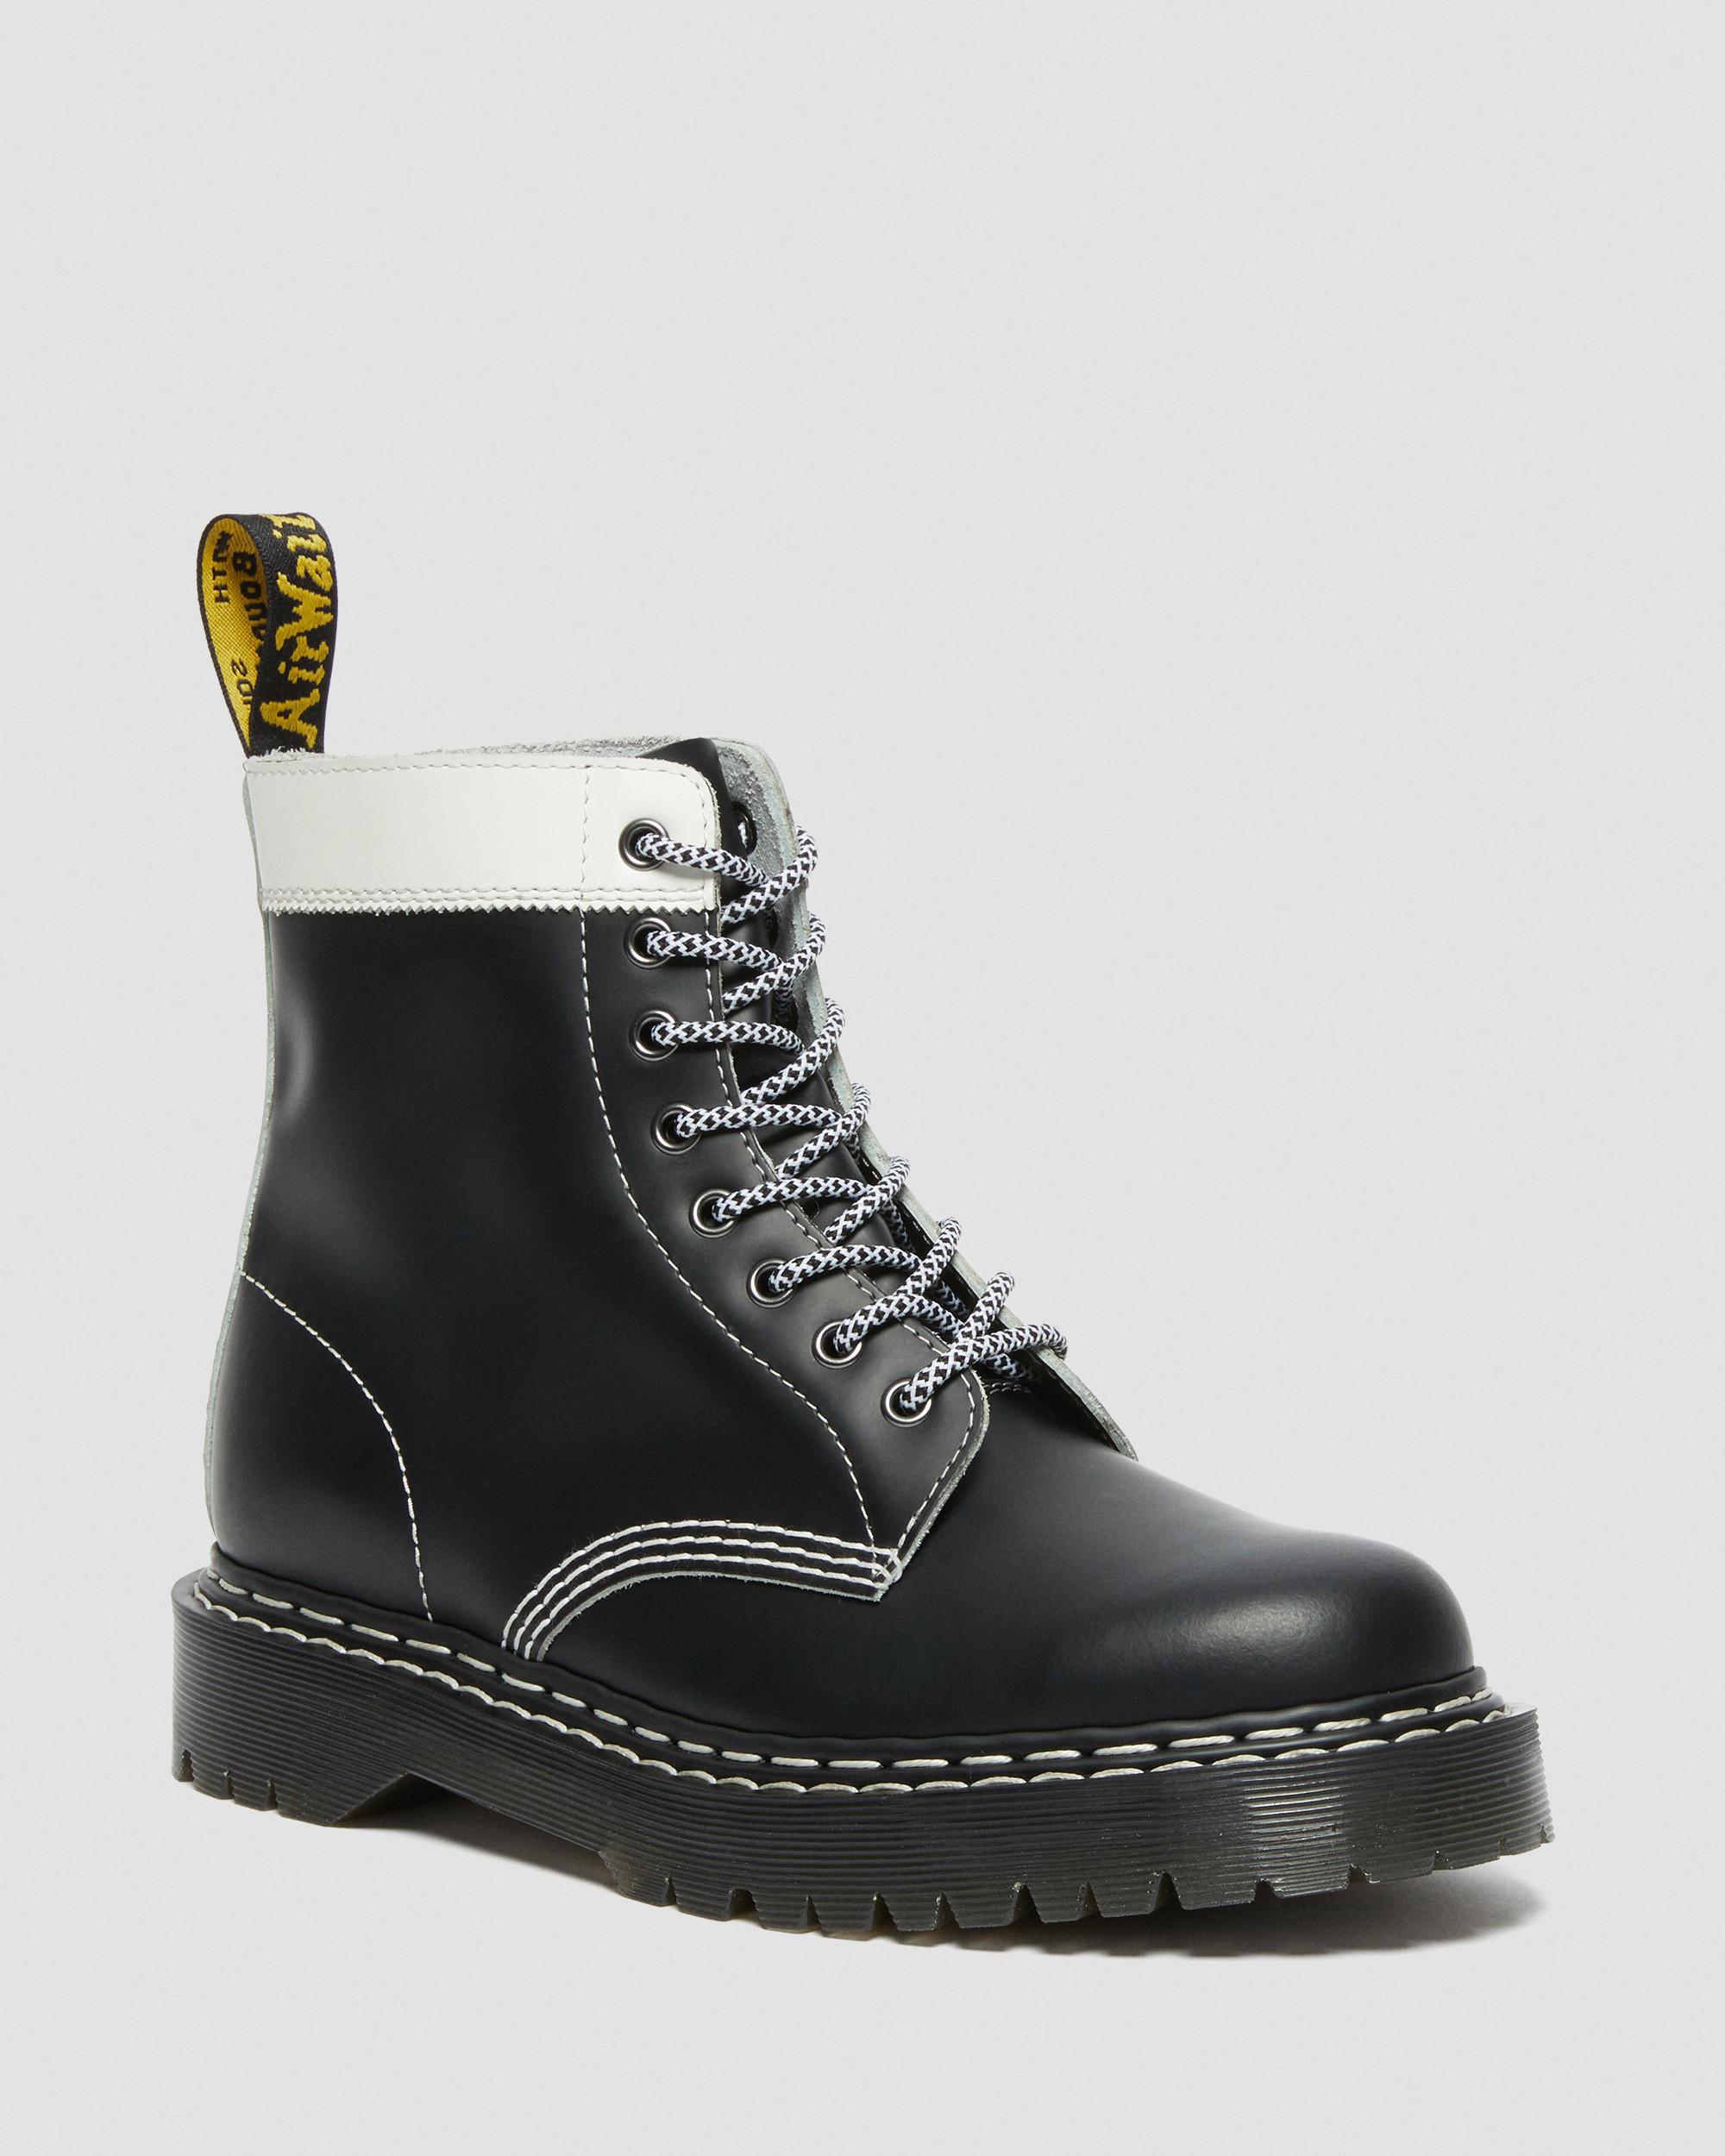 1460 Pascal Bex Leather Contrast Lace Up Boots, Black | Dr. Martens